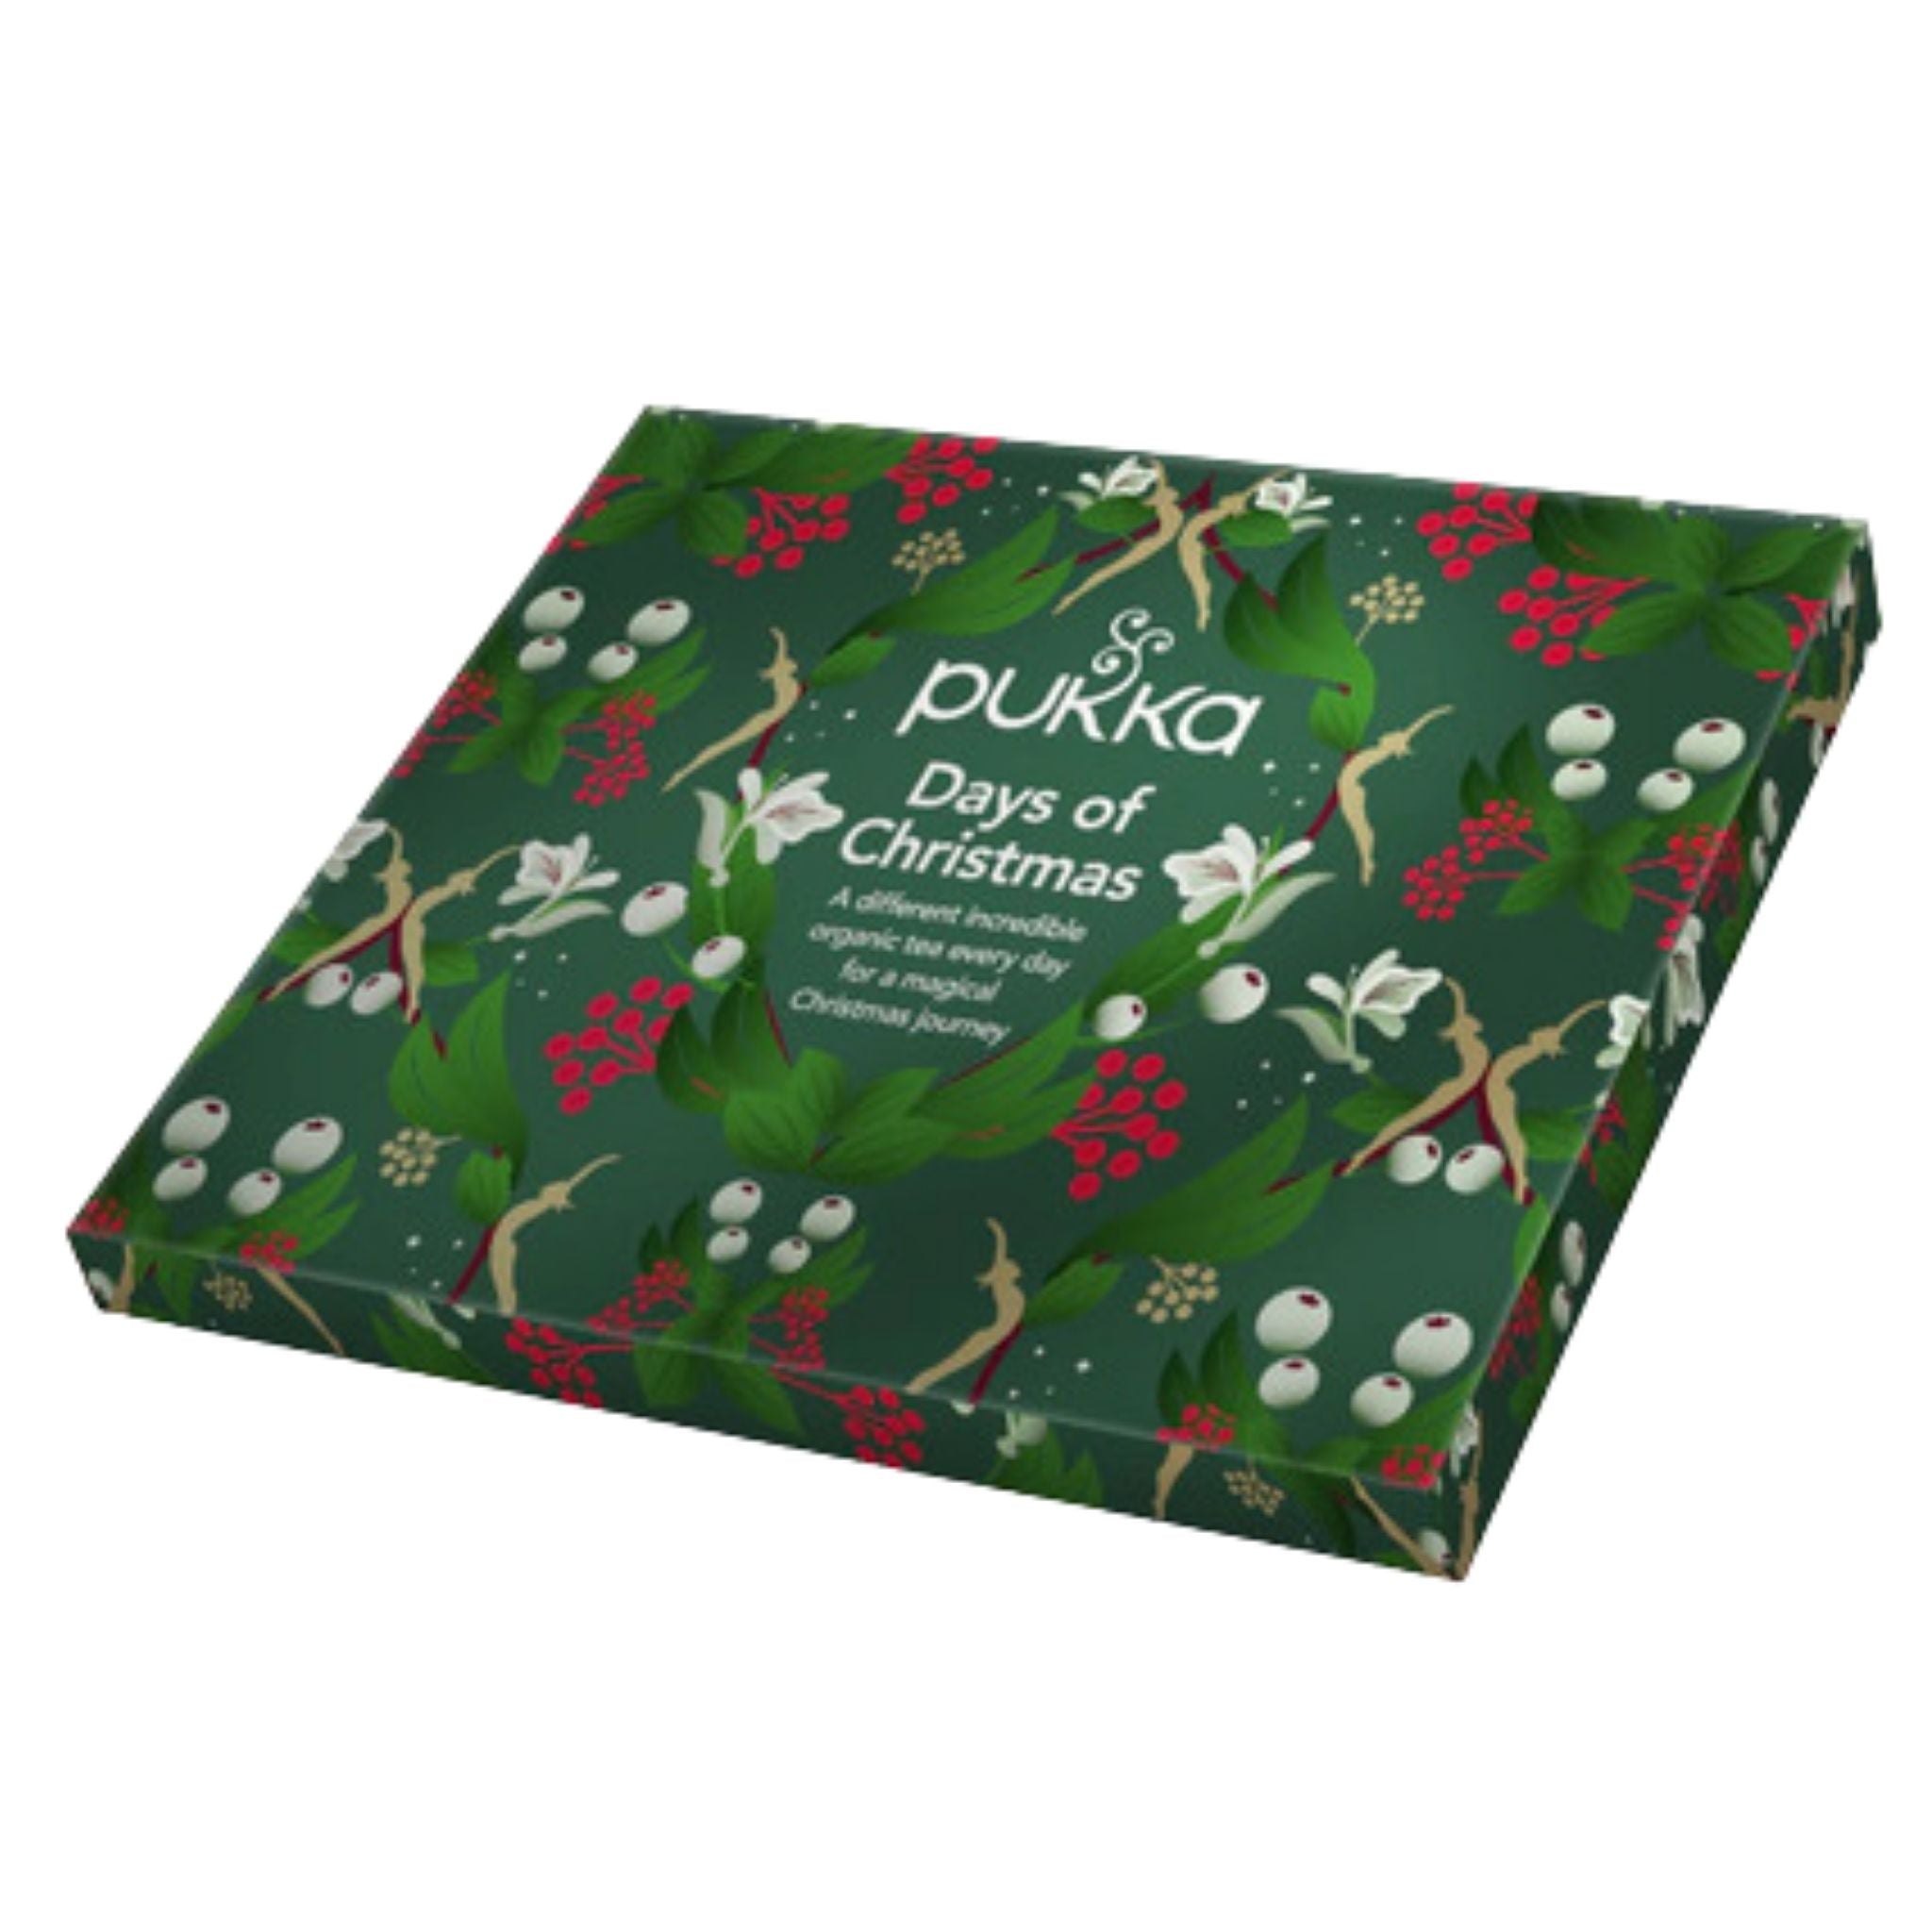 Days of Christmas Advent Calendar - Pukka